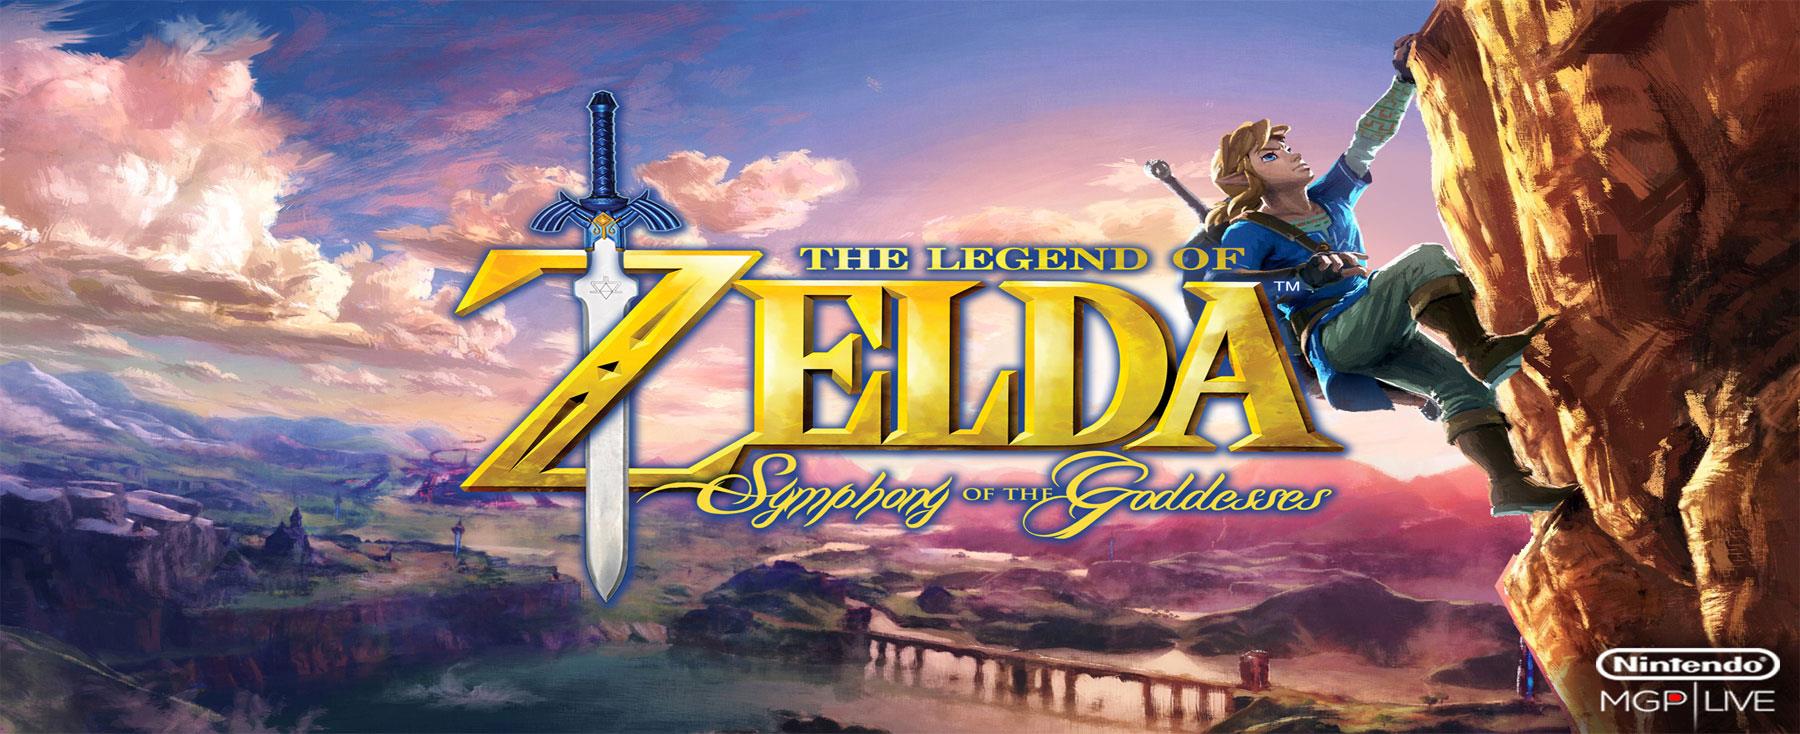 The Legend Of Zelda Symphony of the Goddesses